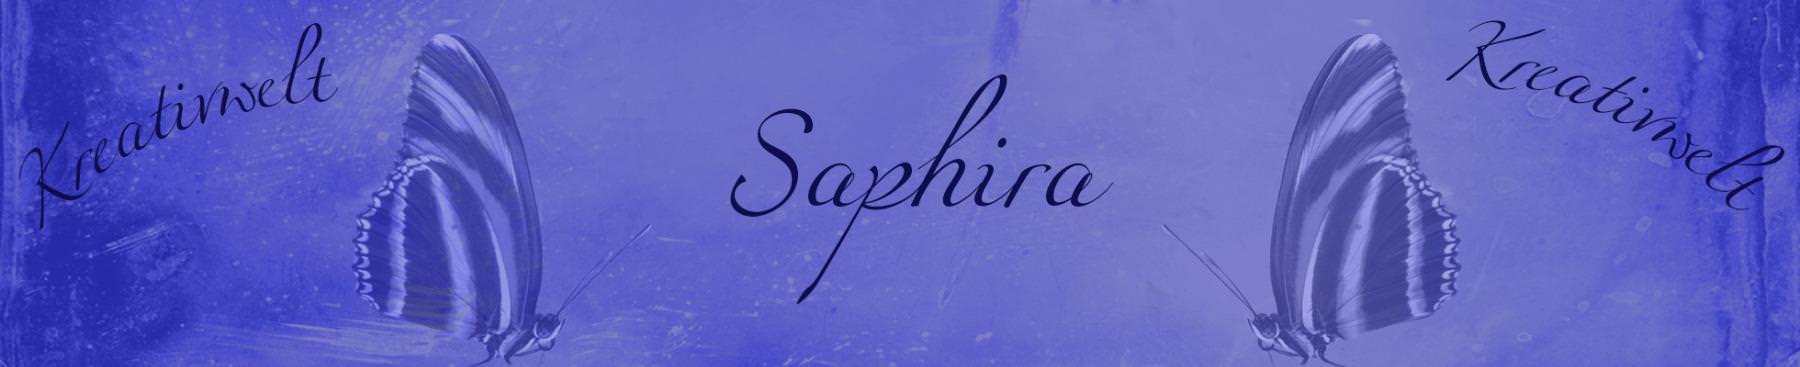 Saphira_Hintergrundbild_Shop